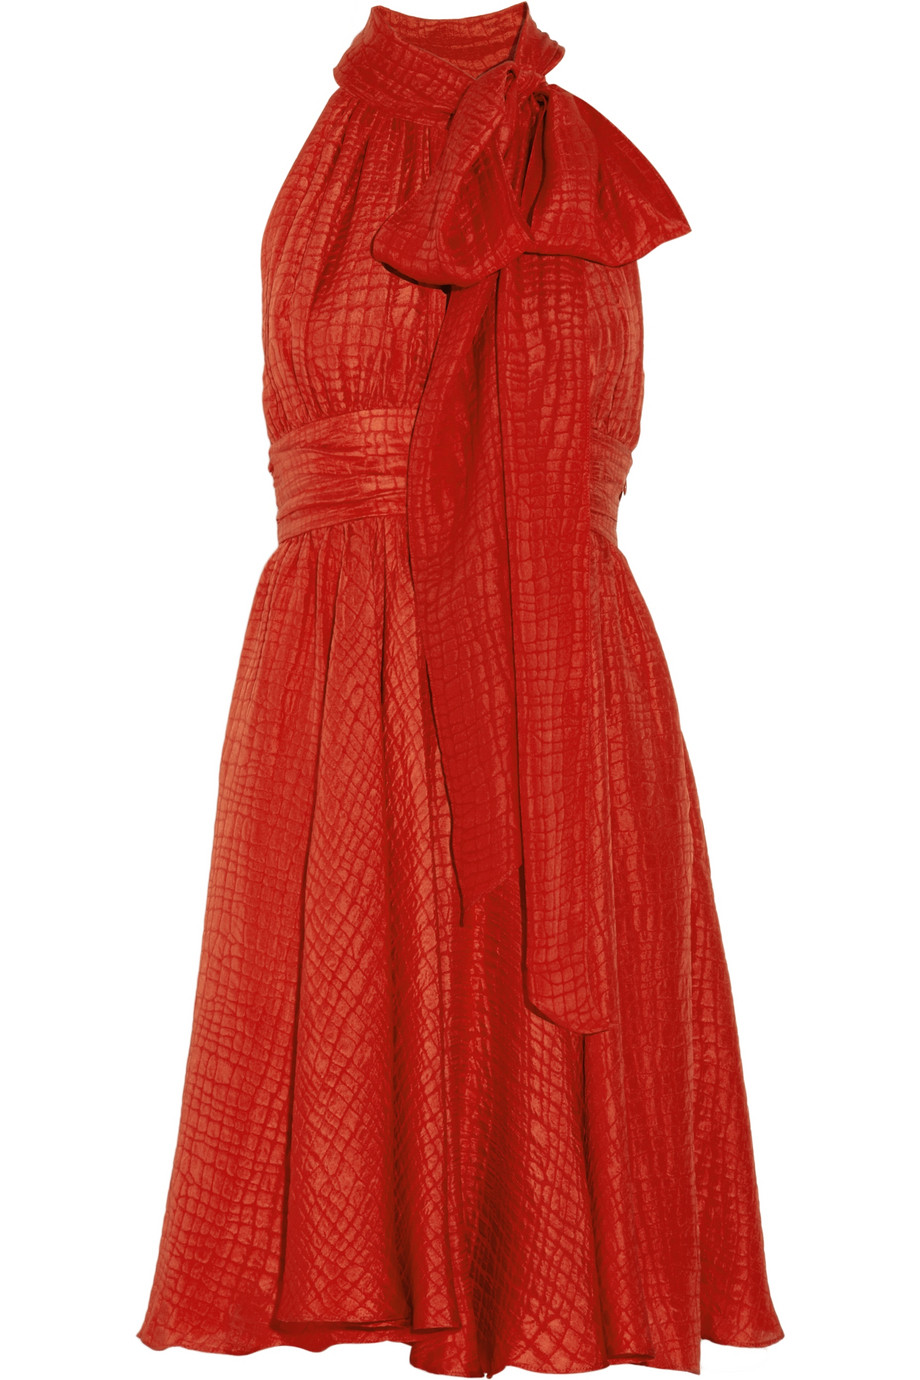 Milly Crocodile-effect Silk Dress in Orange | Lyst